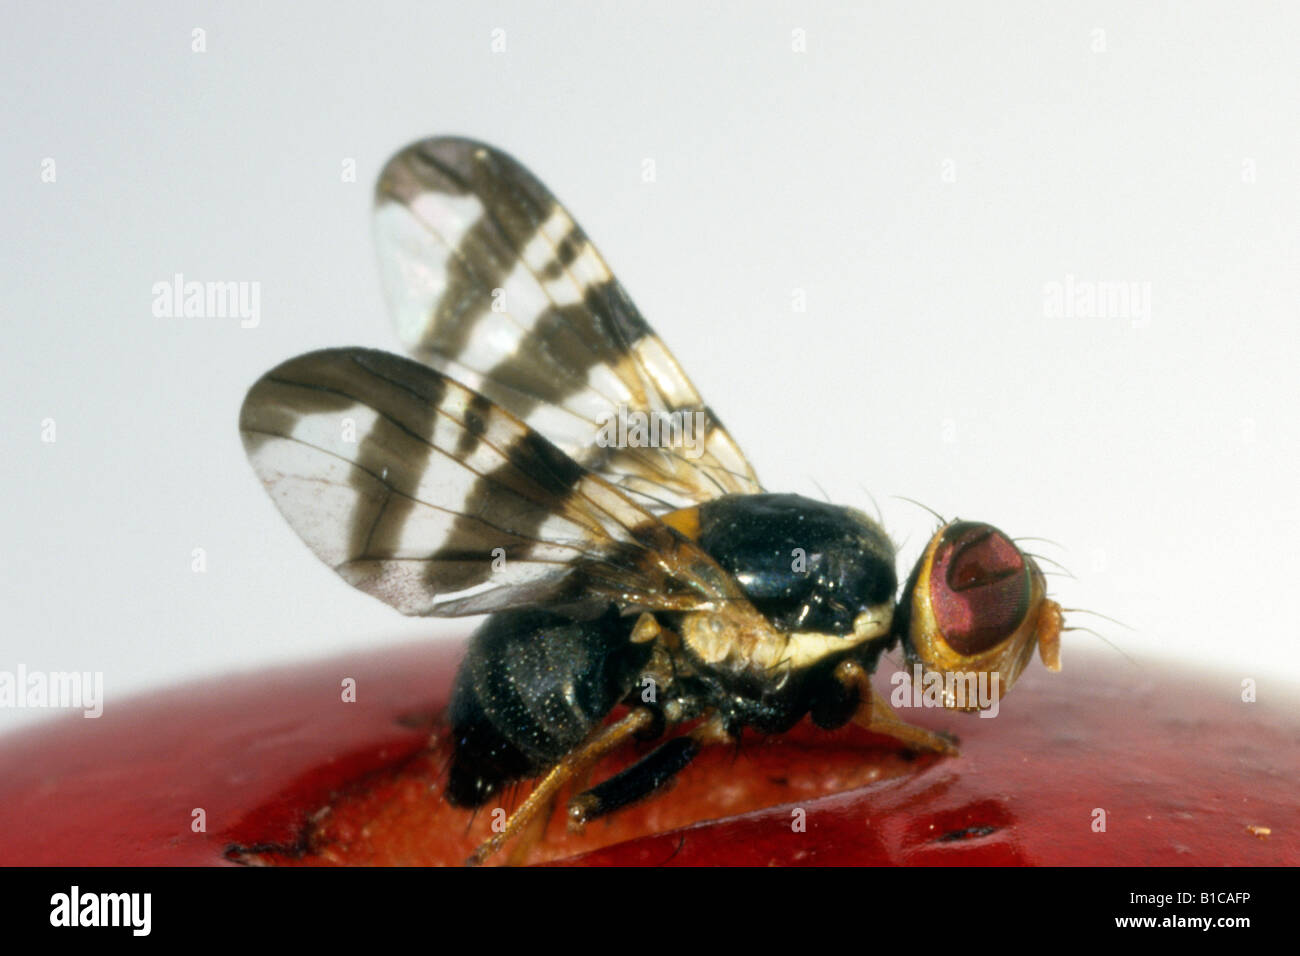 European Cherry Fruit Fly (Rhagoletis cerasi) on cherry, studio picture Stock Photo